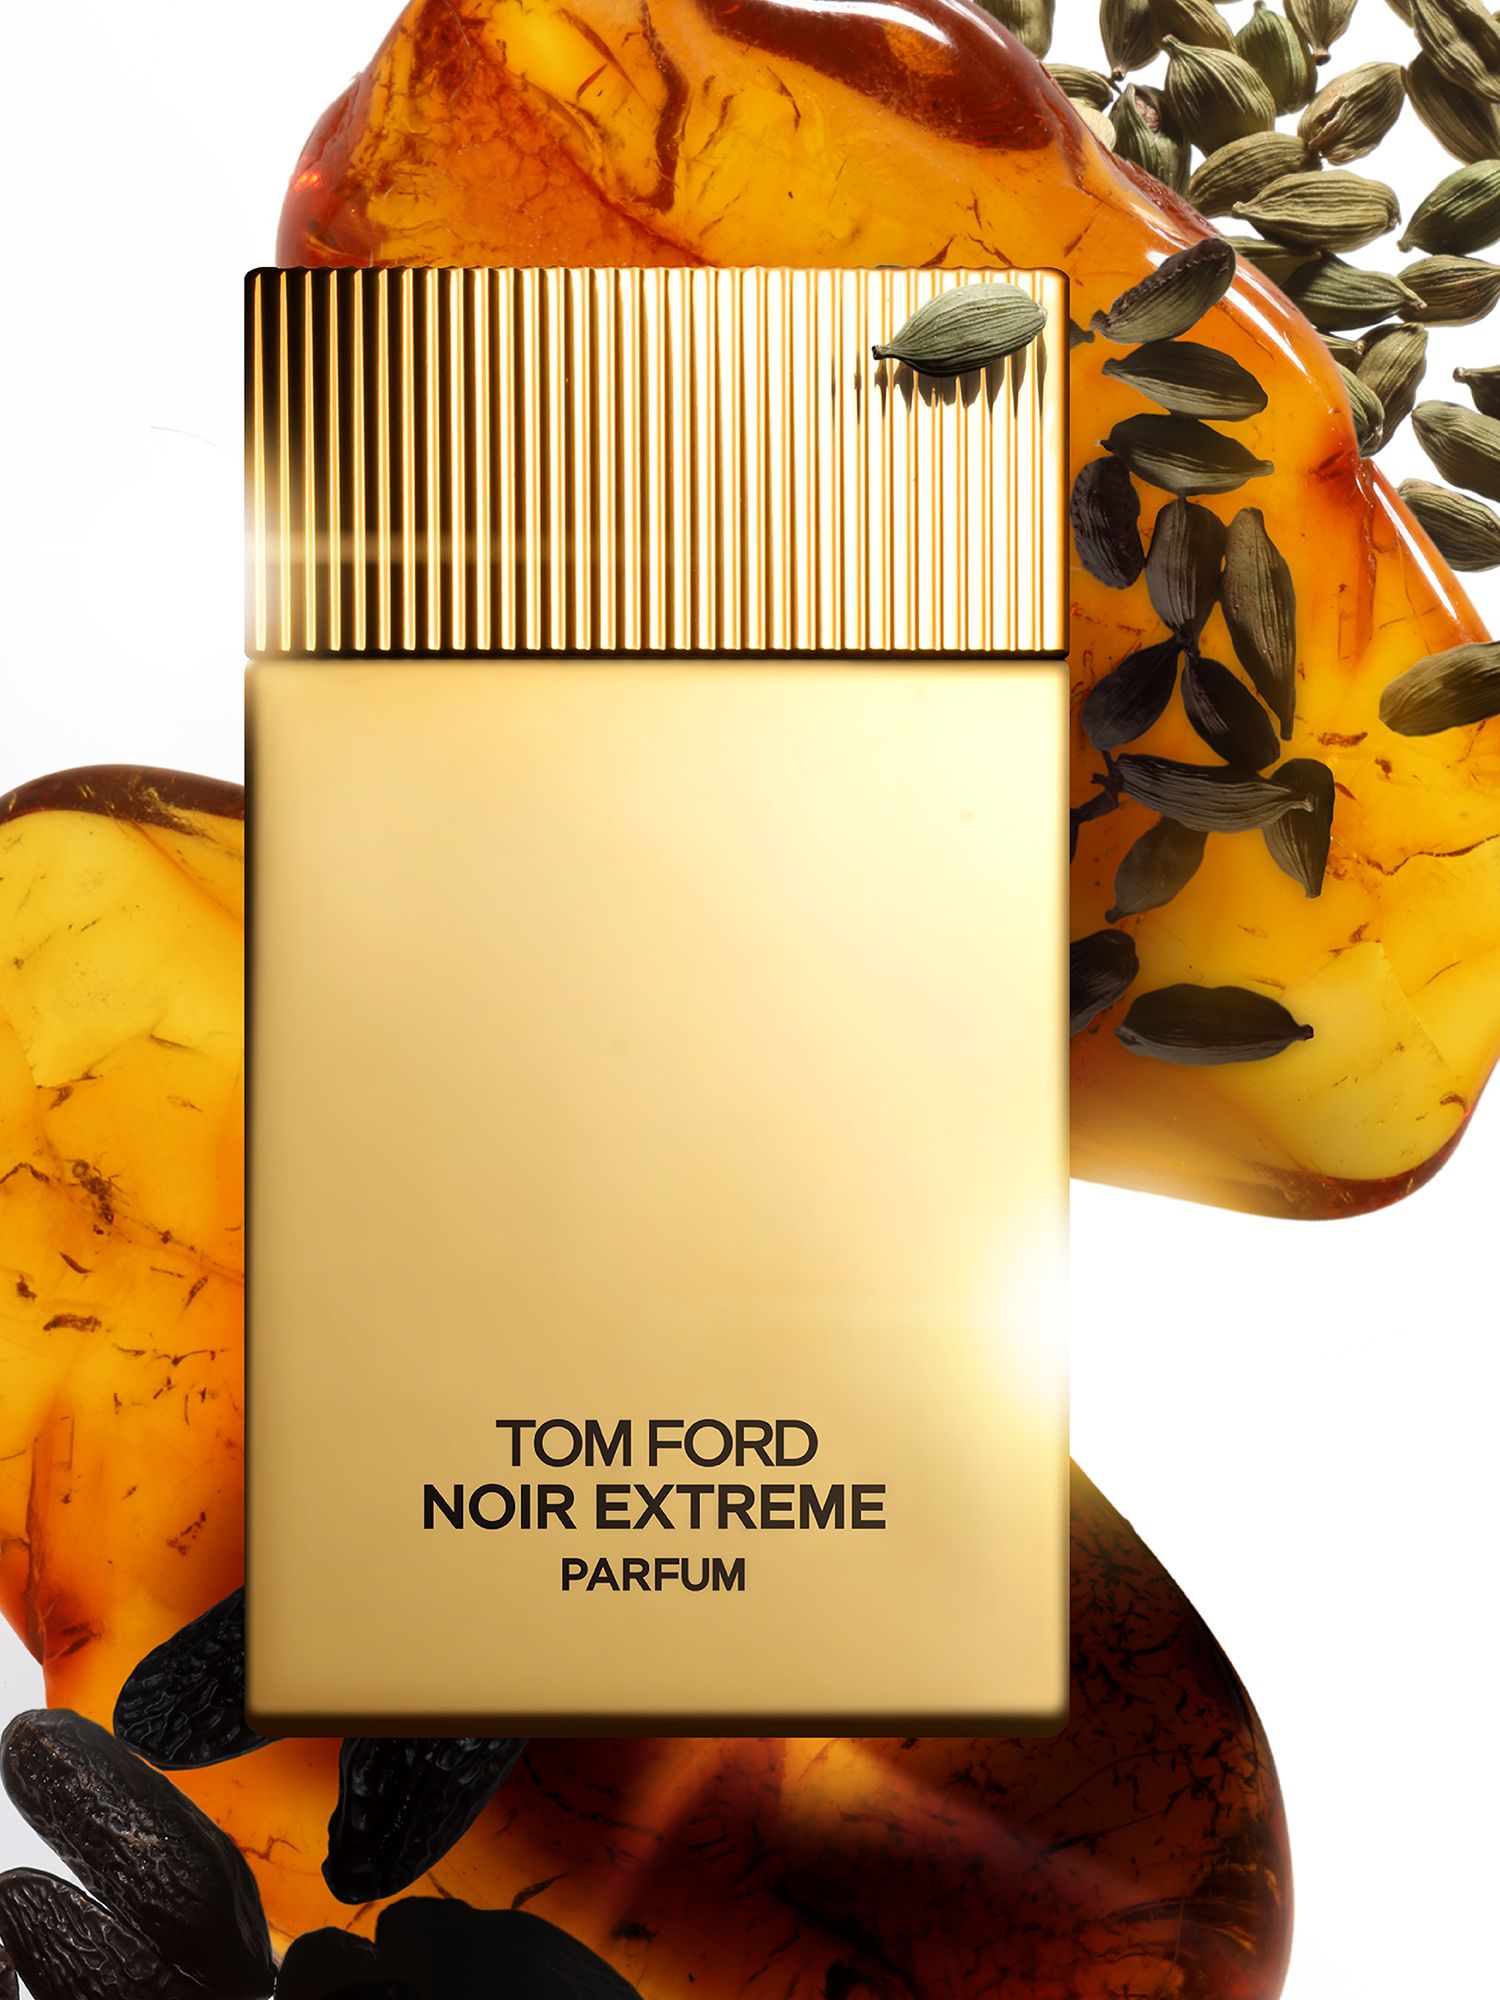 TOM FORD Noir Extreme Parfum, 50ml at John Lewis & Partners